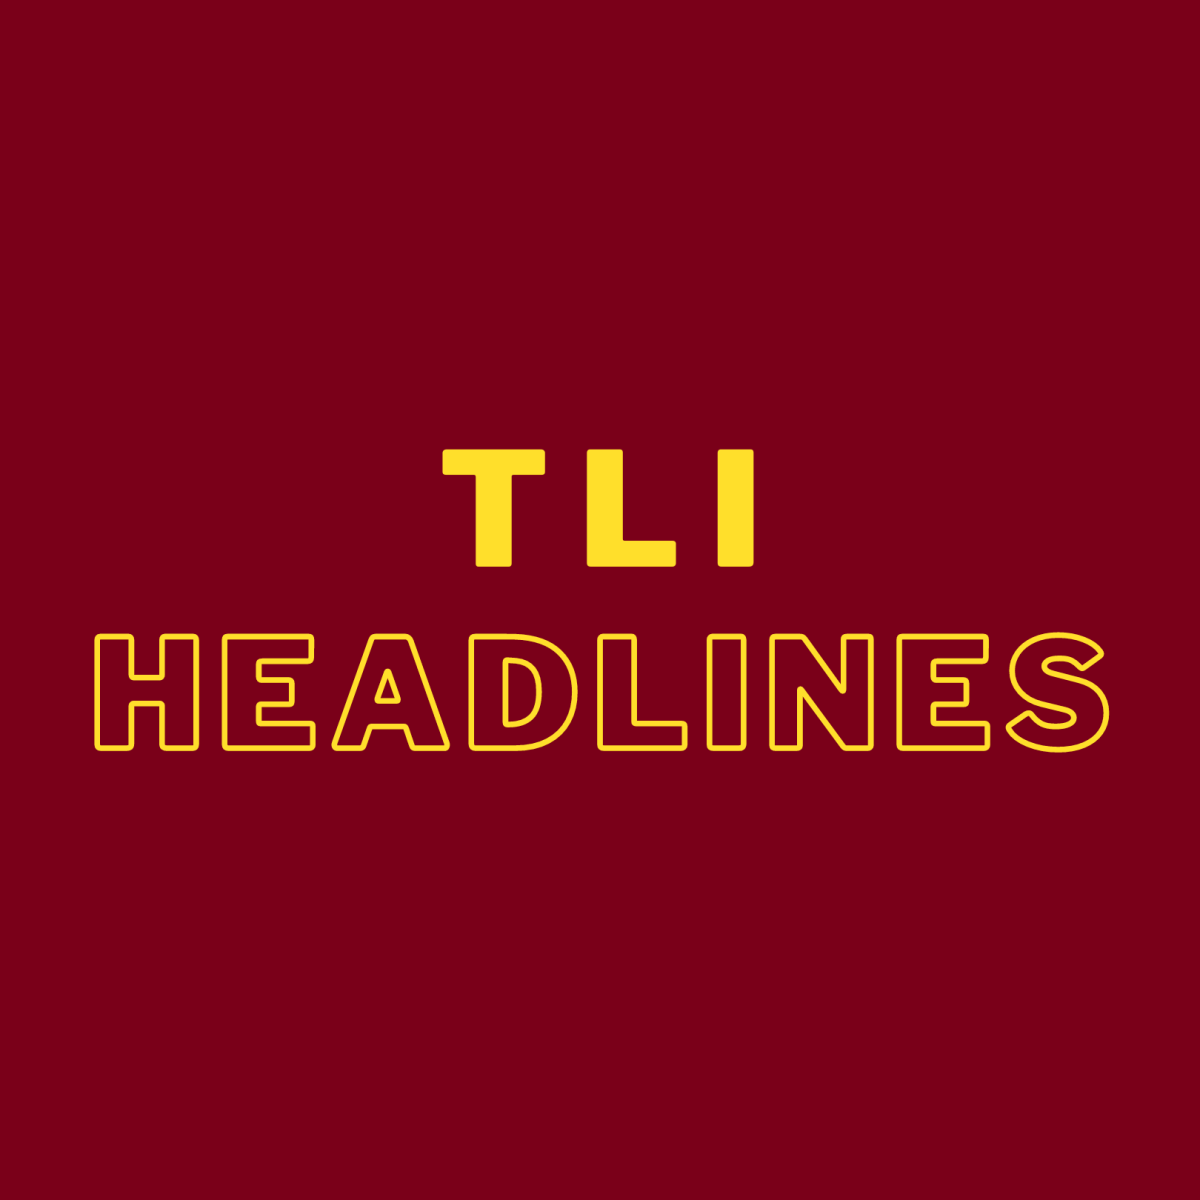 TLI headlines cover.png